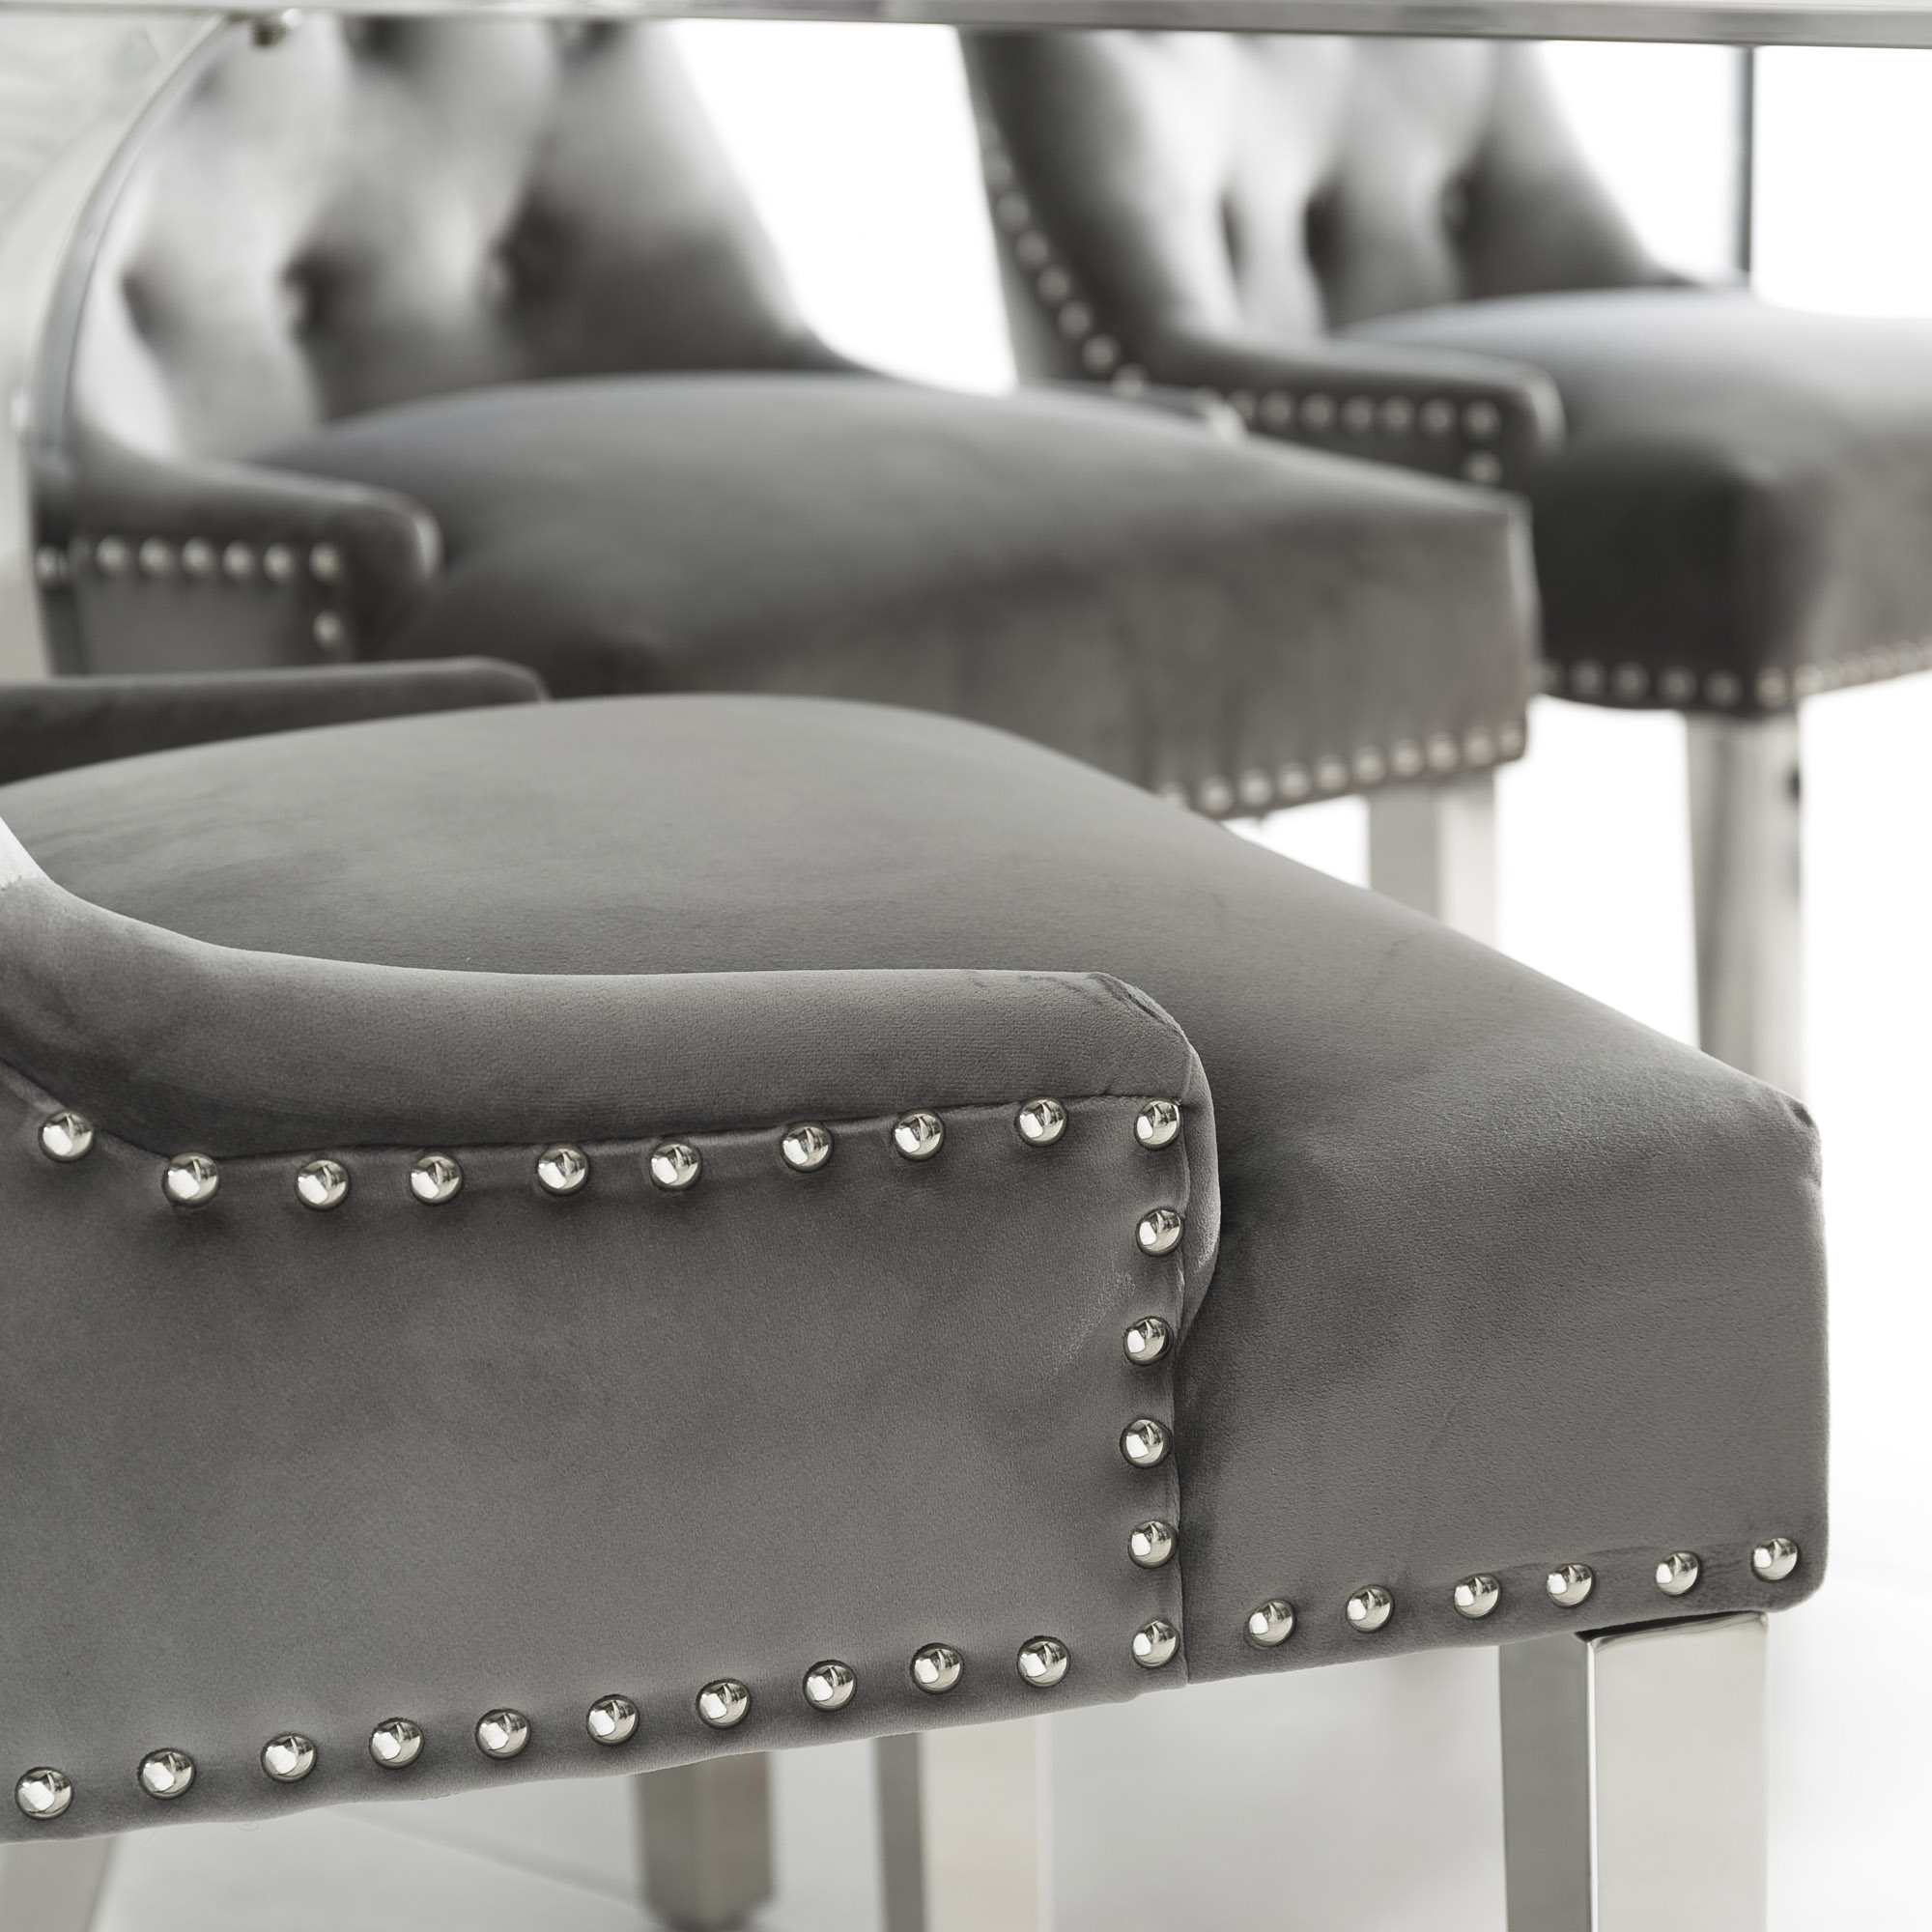 Set of 4 Knightsbridge Grey Brushed Velvet Dining Chair – Steel Legs